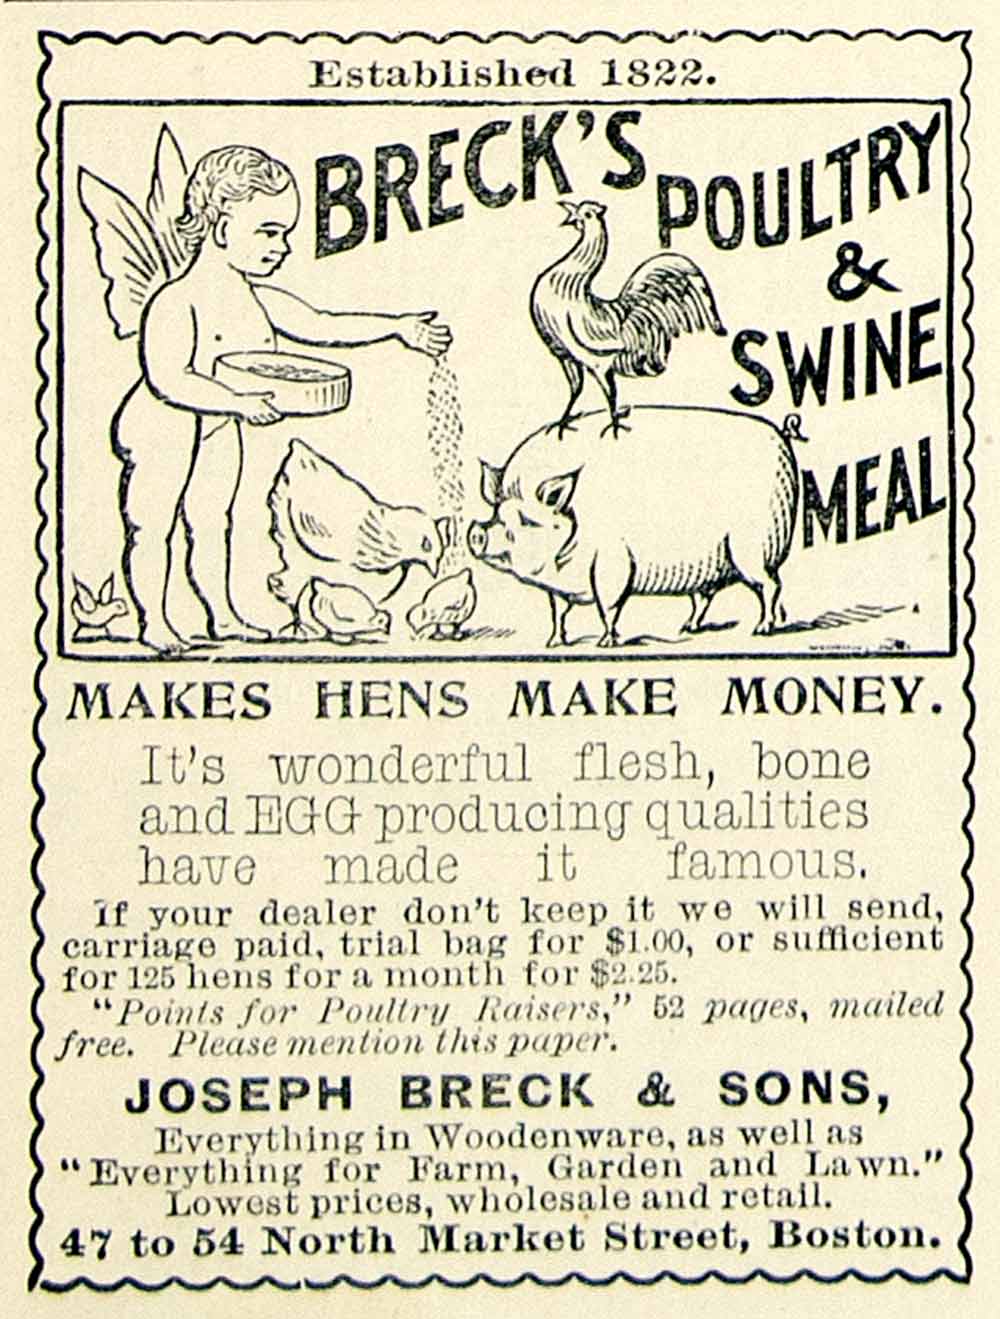 1895 Ad Joseph Breck Poultry Swine Meal 4754 N Market St Boston MA Farm CCG1